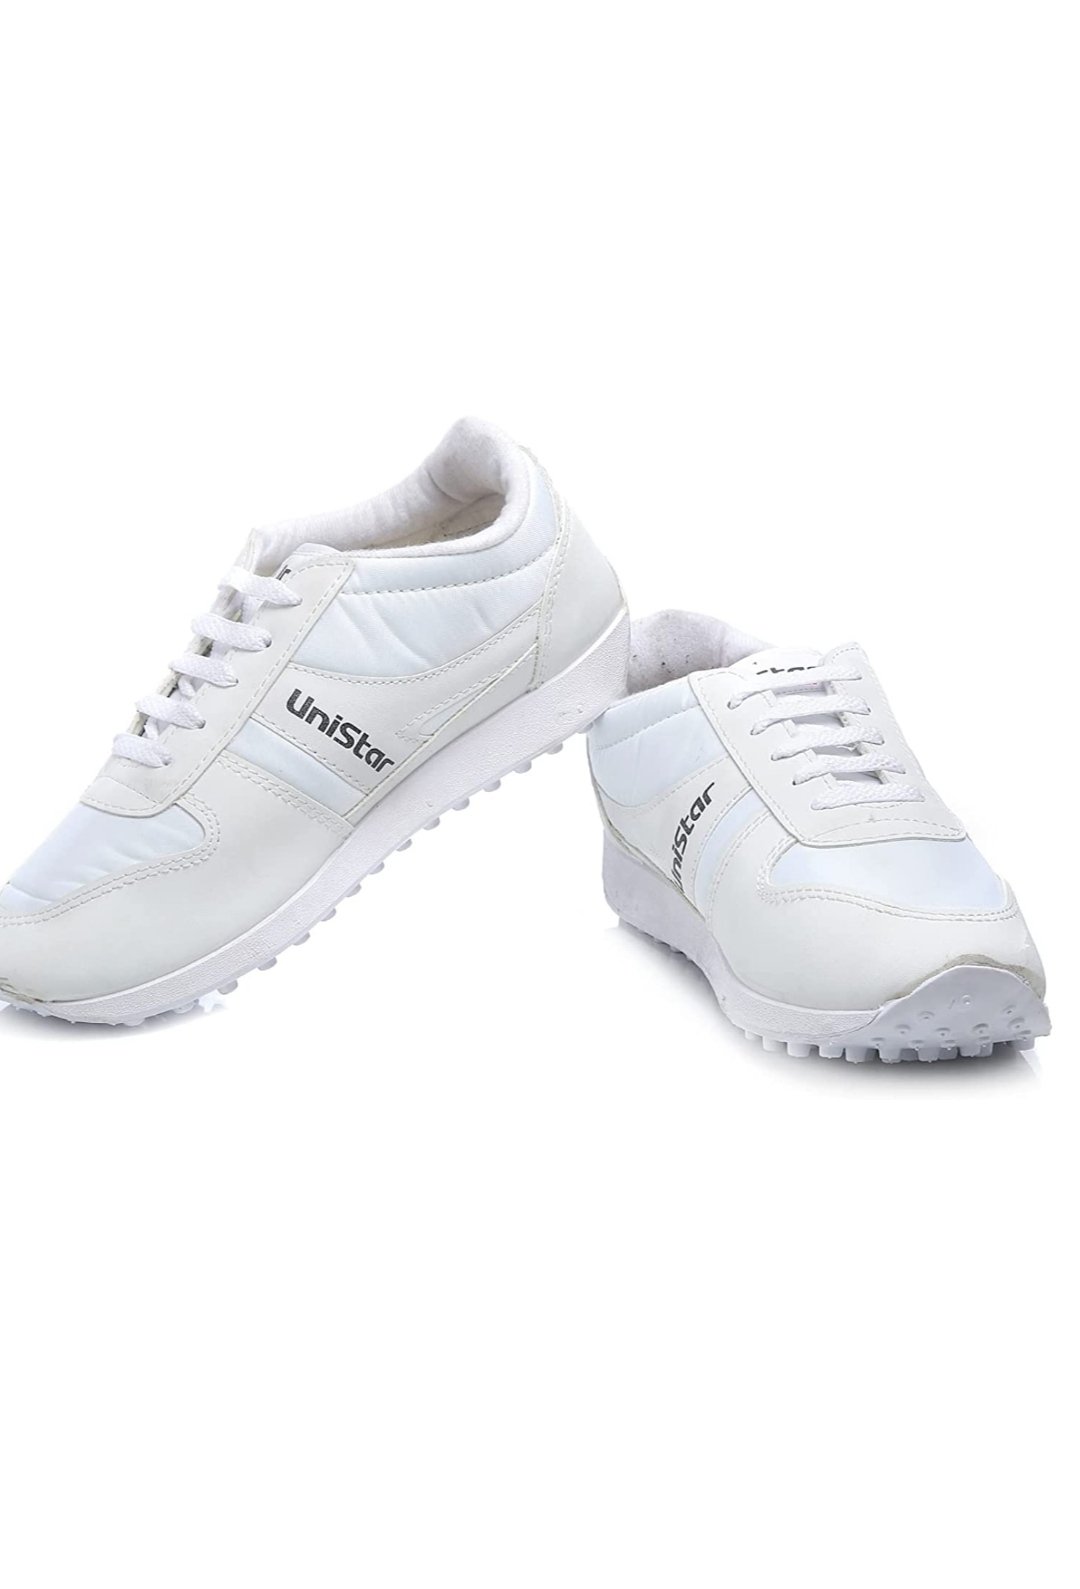 Buy Unistar Men's White Running Shoes -11 UK/India (44 EU)(12 US) at  Amazon.in-iangel.vn